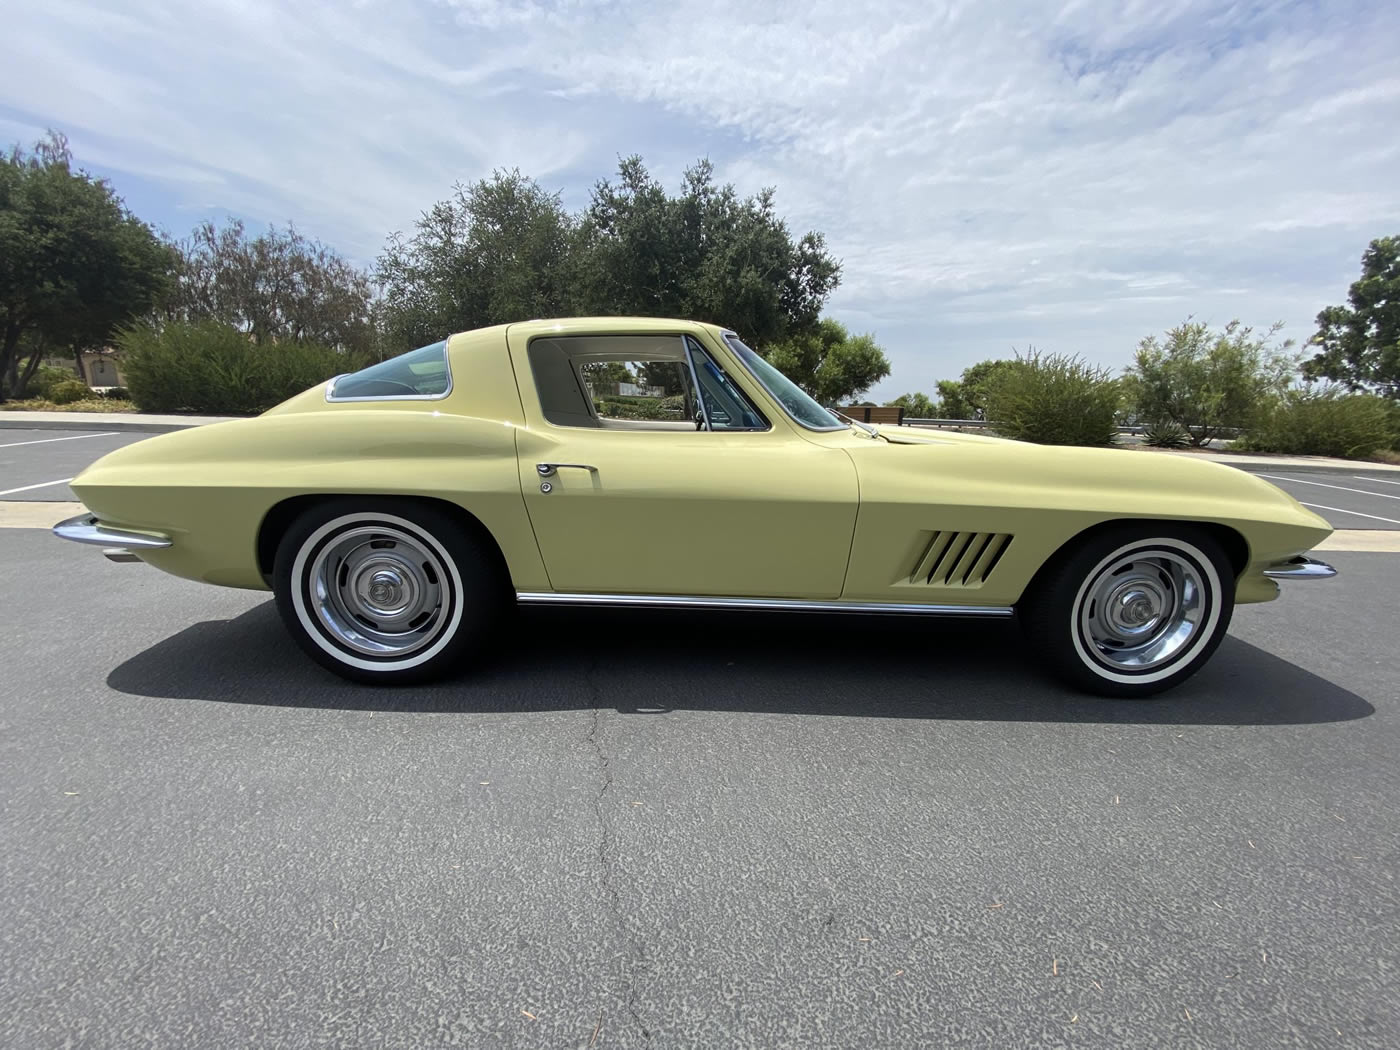 1967 Corvette Coupe L75 327/300 4-Speed in Sunfire Yellow